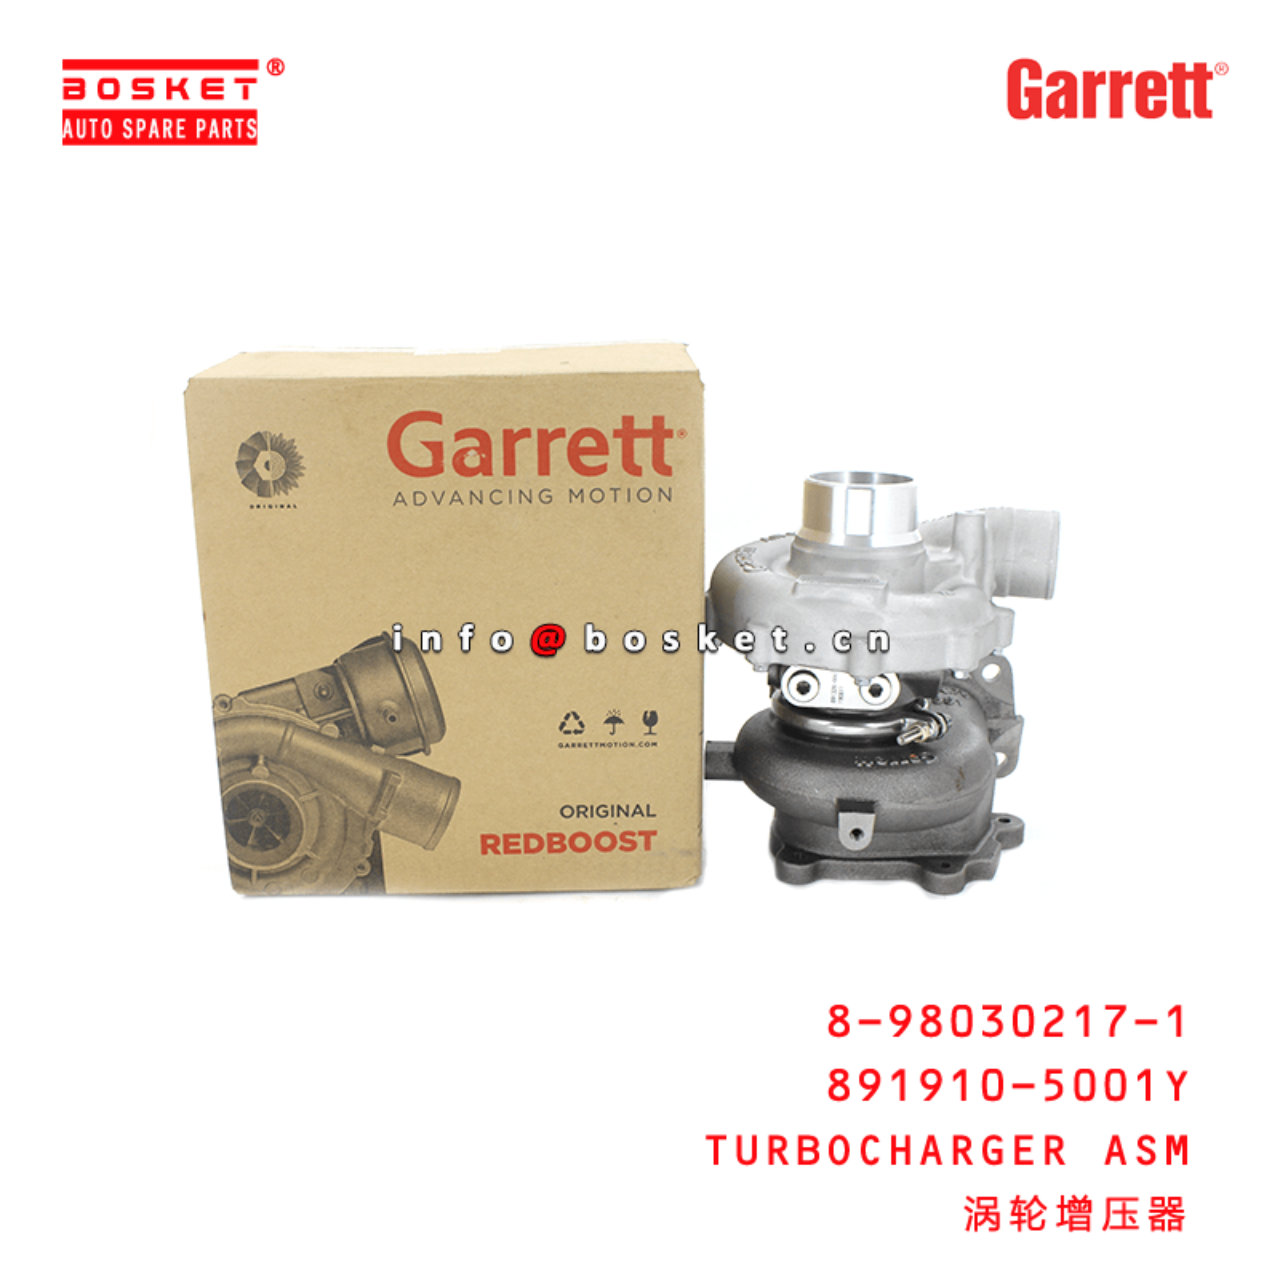 Garrett Genuine 891910-5001Y 8-98030217-1 Turbocharger Assembly Suitable for ISUZU XD 4HK1 